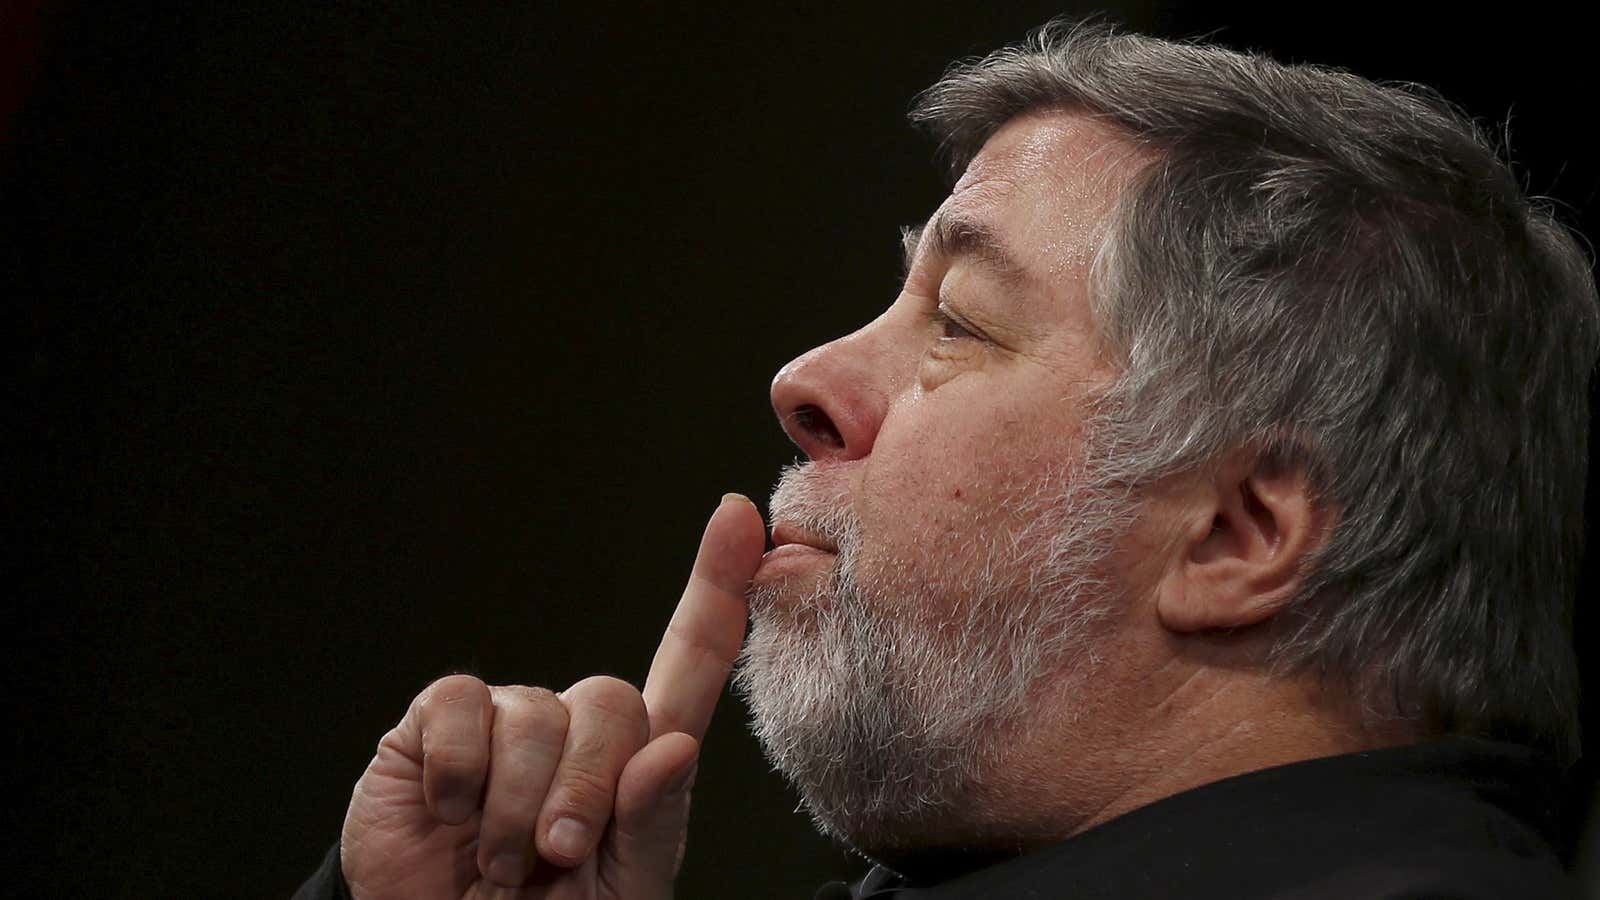 Apple co-founder Steve Wozniak has something new up his sleeve.